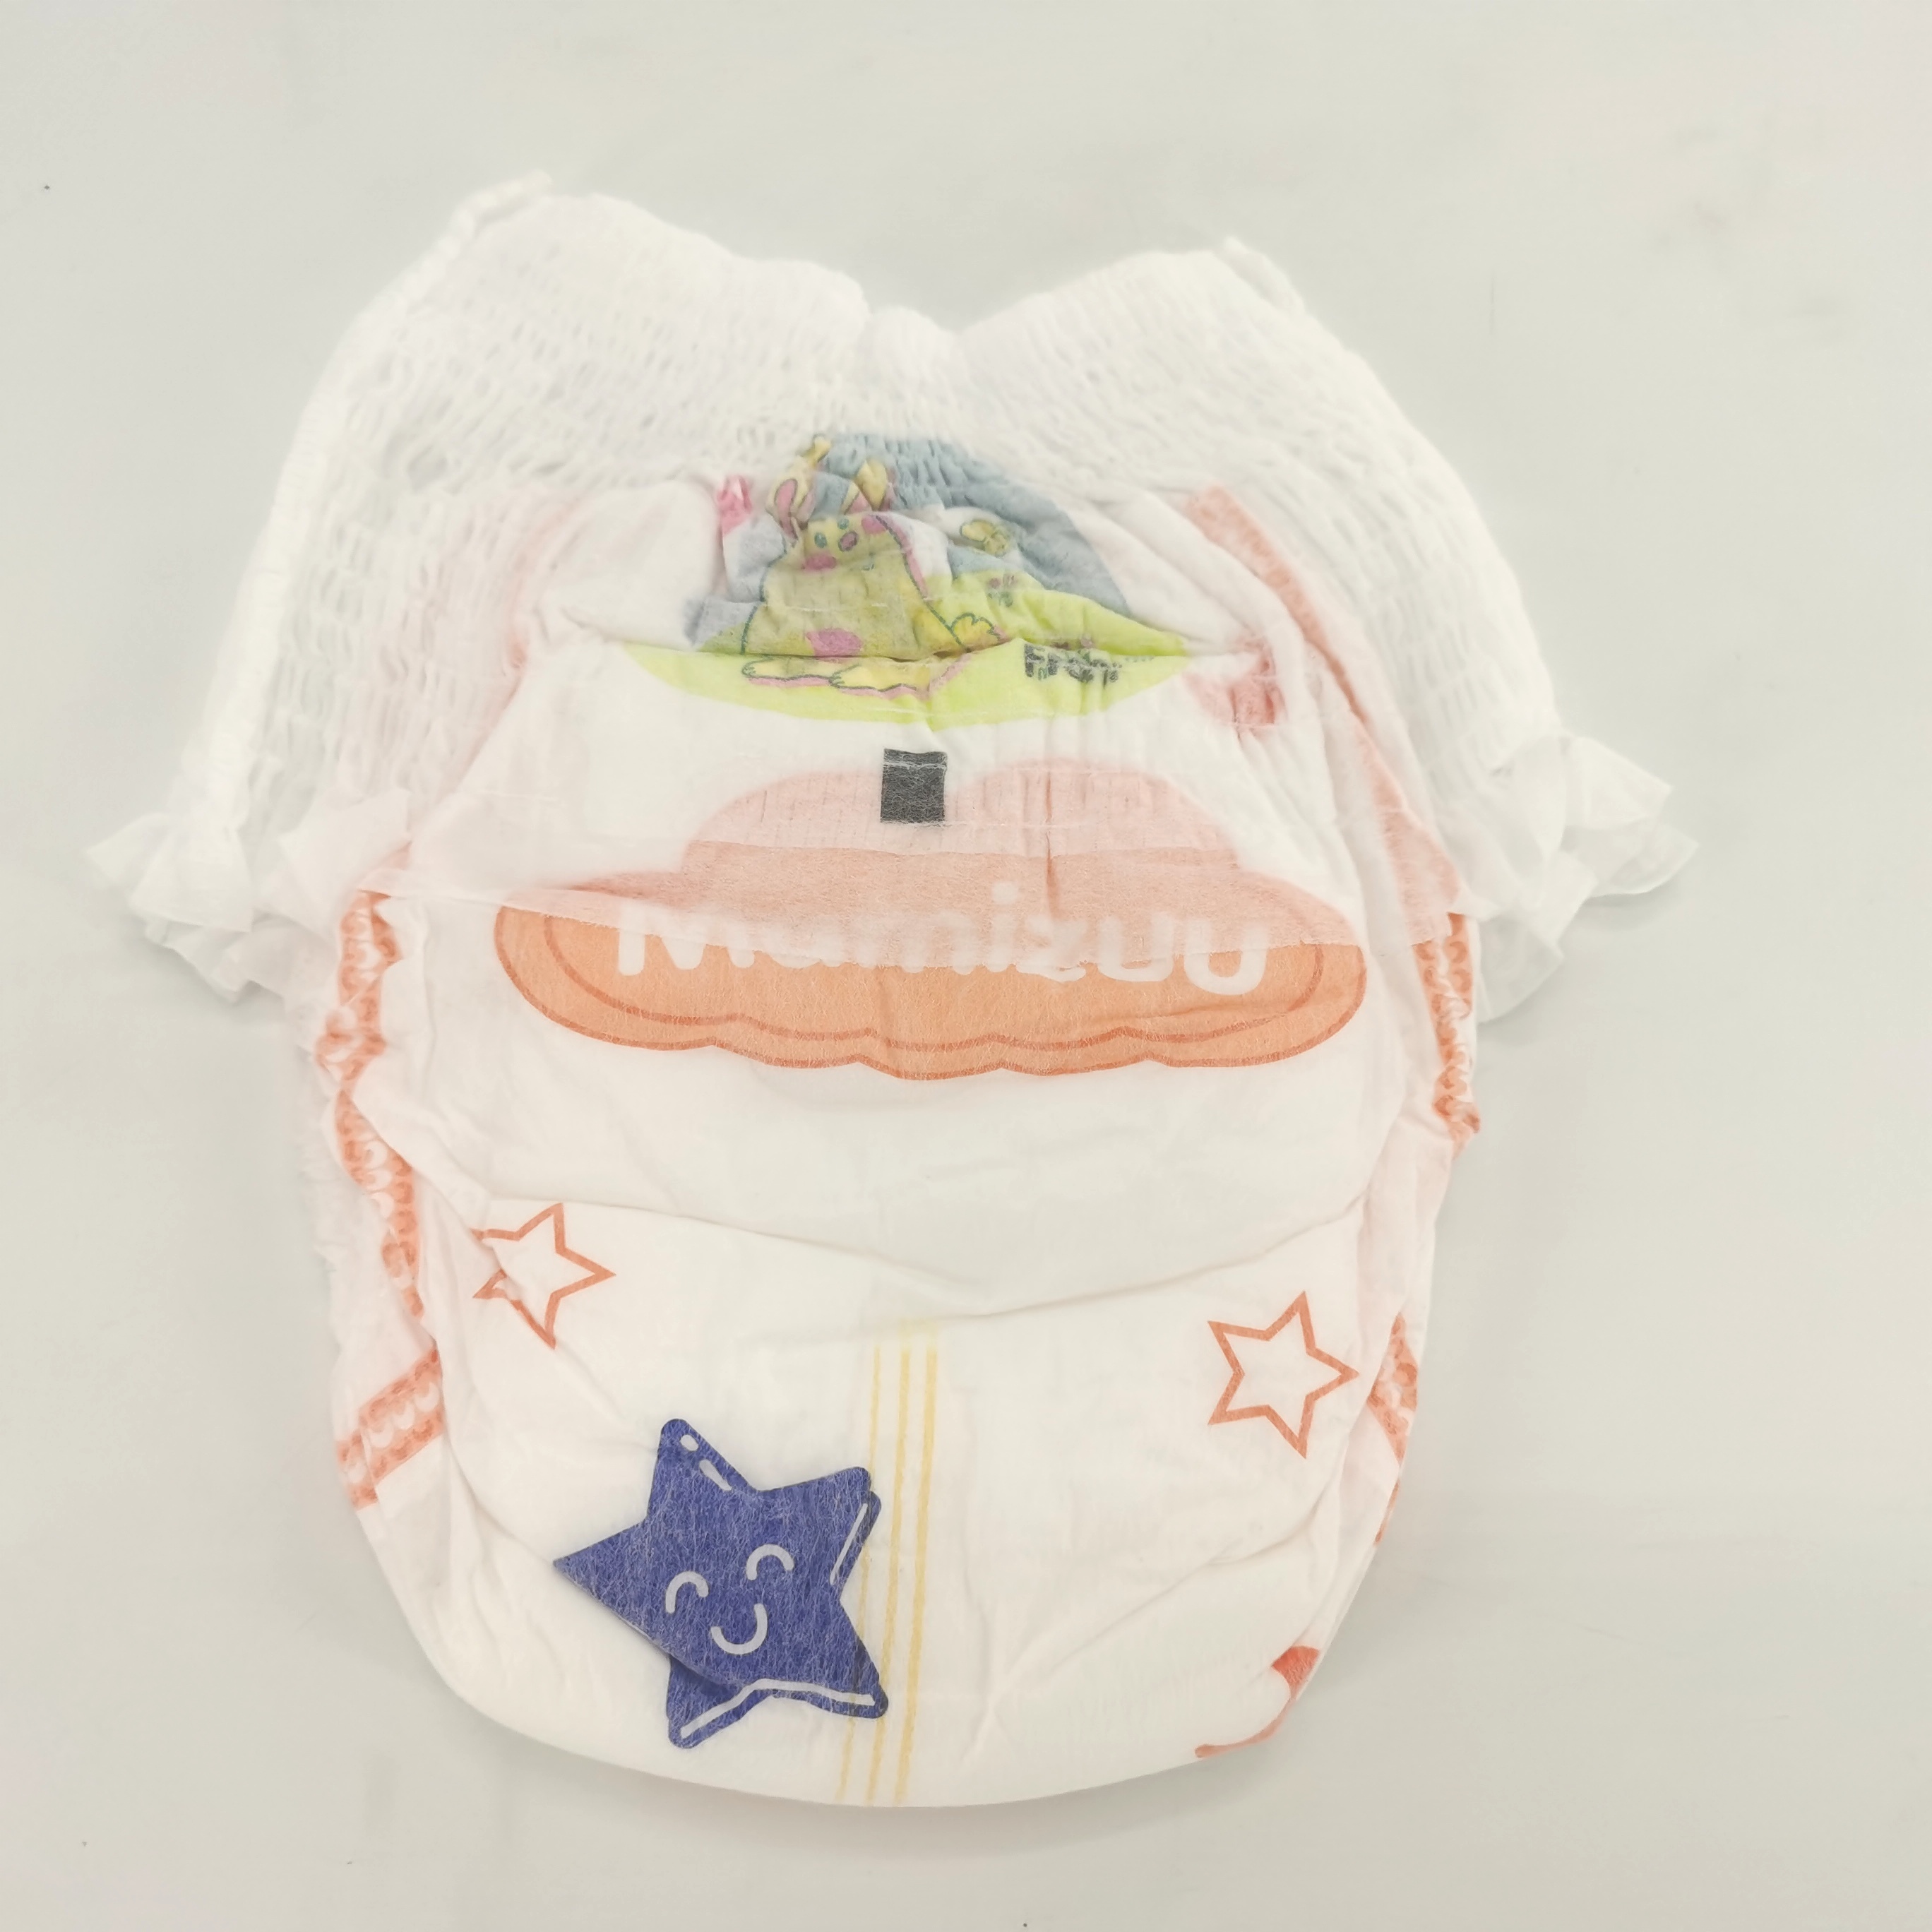 Quality Inspection for Mama Koala Diapers - Mamizuu A Grade Premium BabyDiaper baby patns traning pants manufacture – Ensha